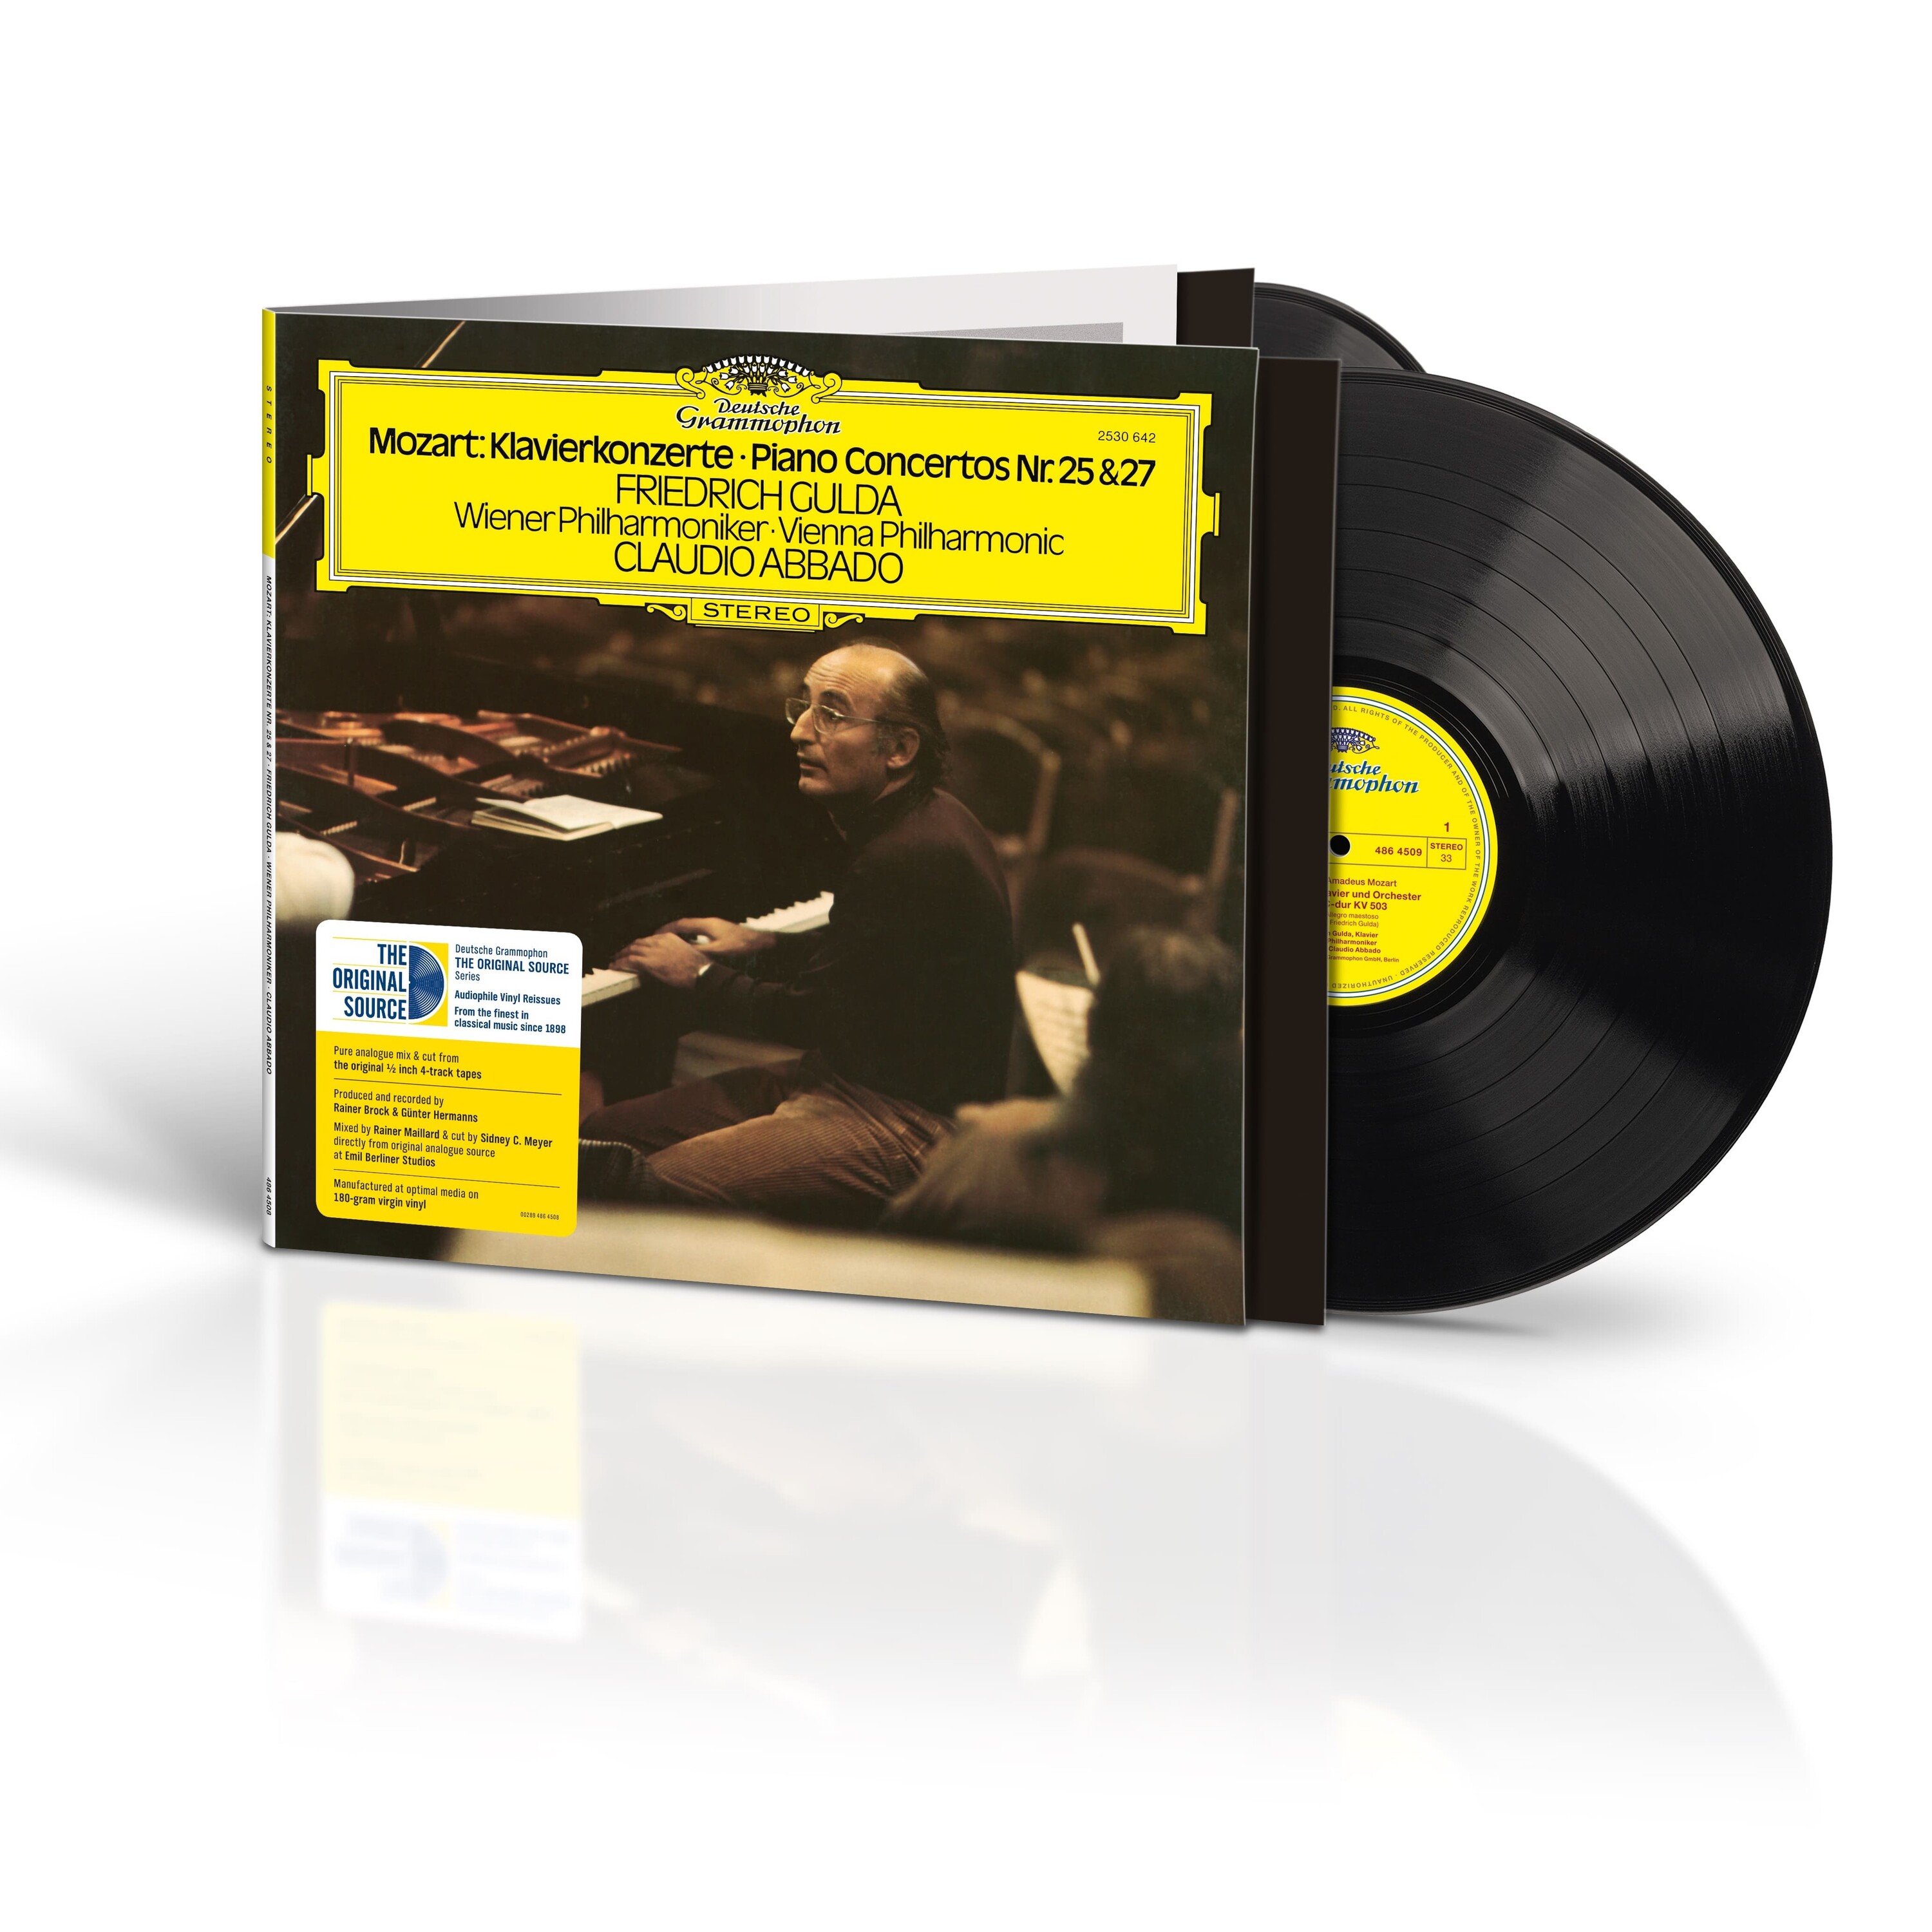 Mozart: Piano Concertos 25 & 27 Friedrich Gulda Claudio Abbado DG Original Source